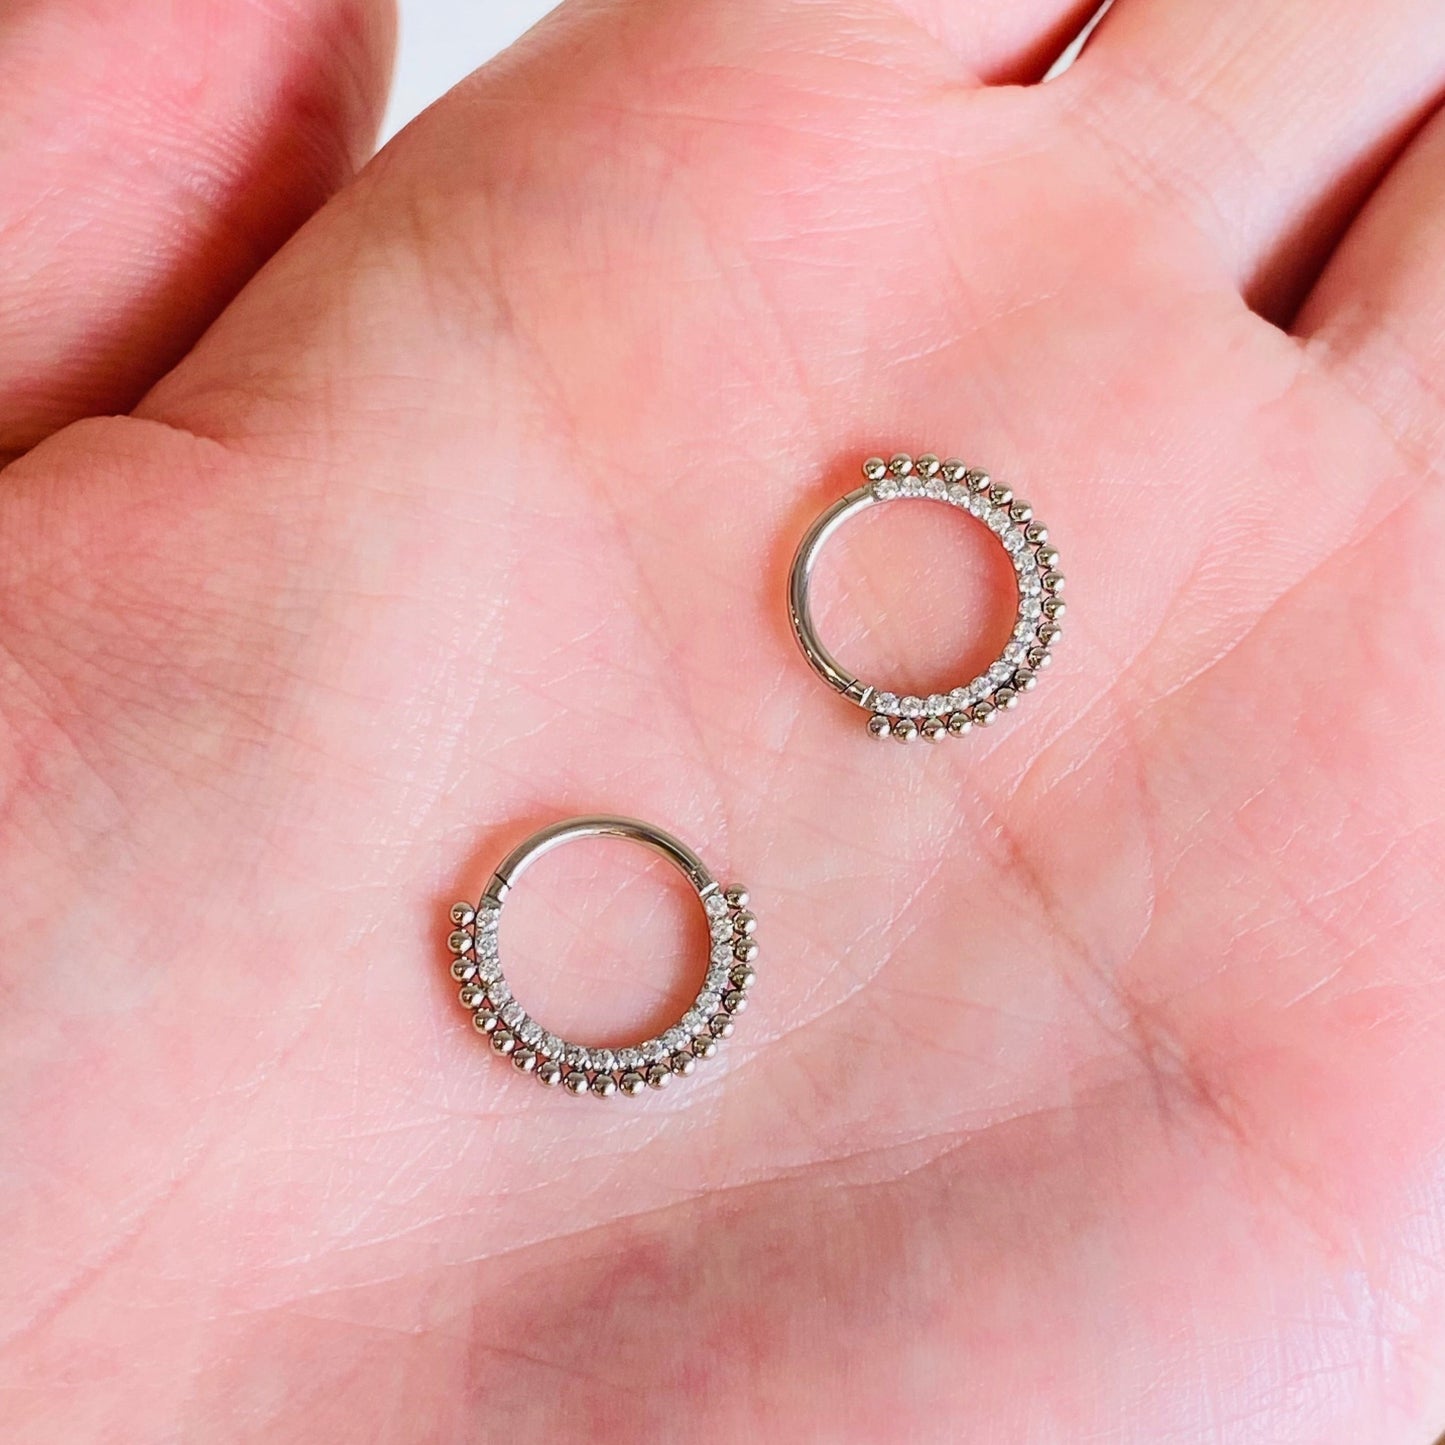 Steel Paved CZ Beads Hinged Segment Clicker